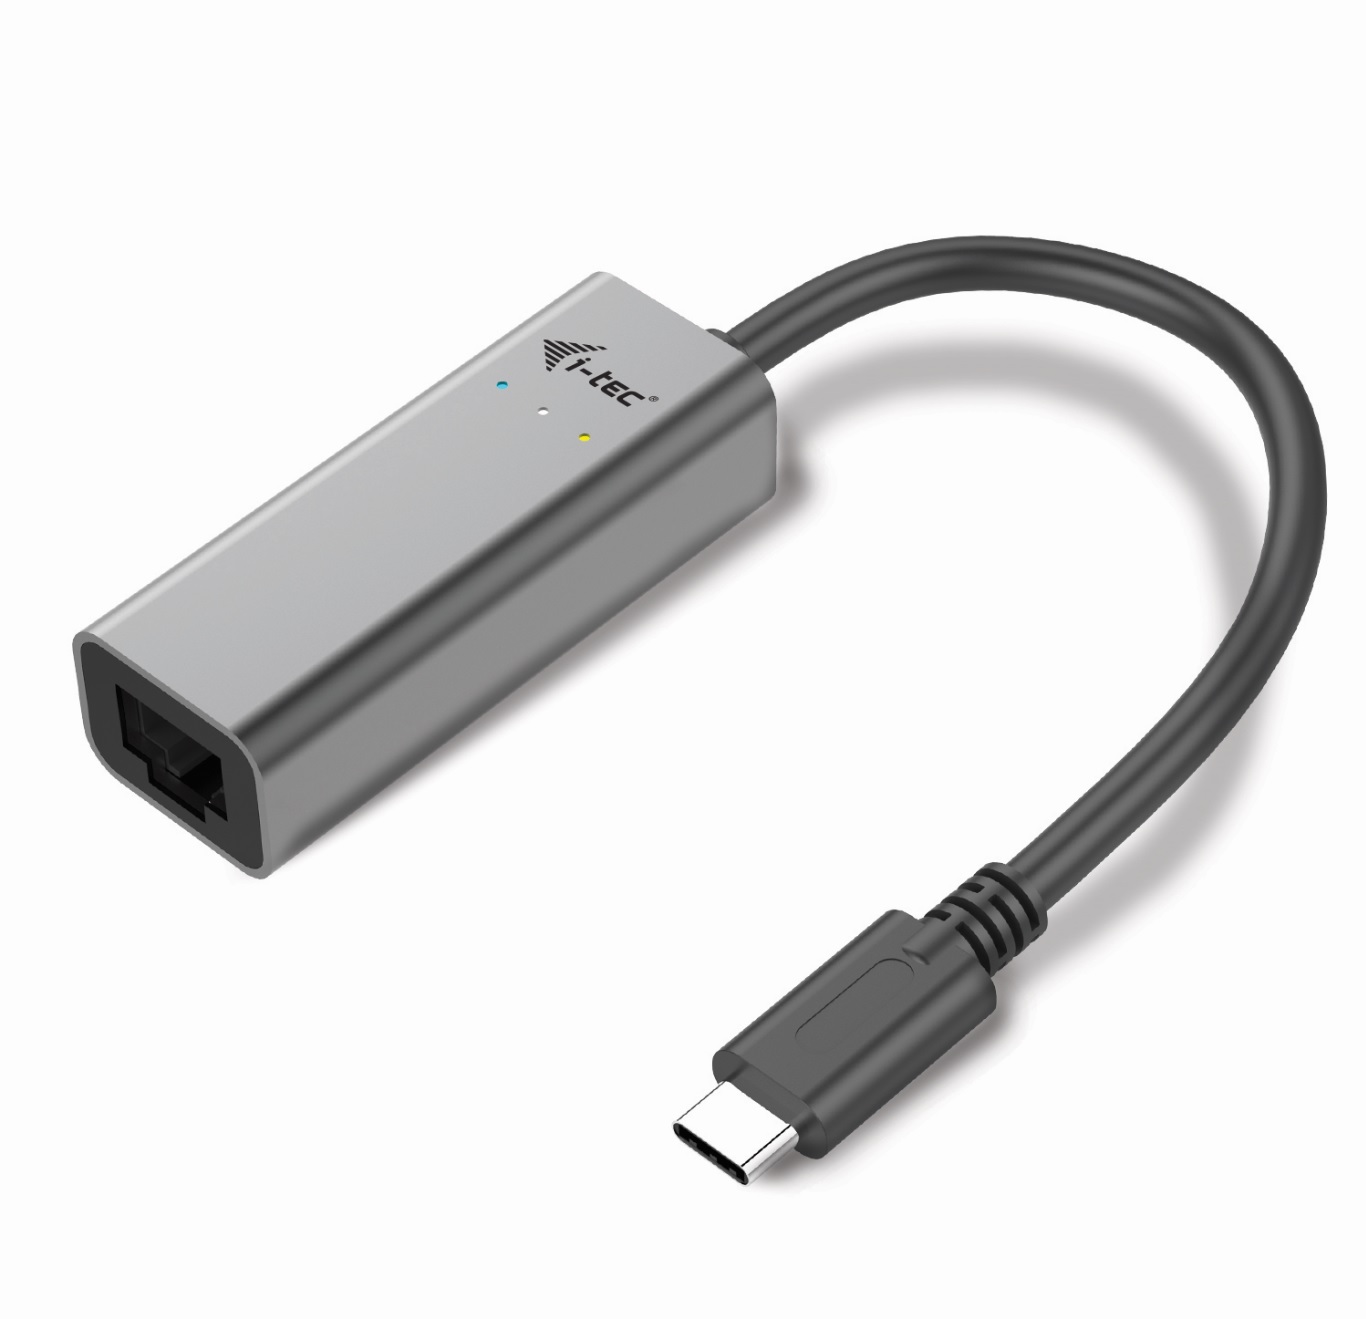 Obrázek i-tec USB-C Metal Gigabit Ethernet Adapter